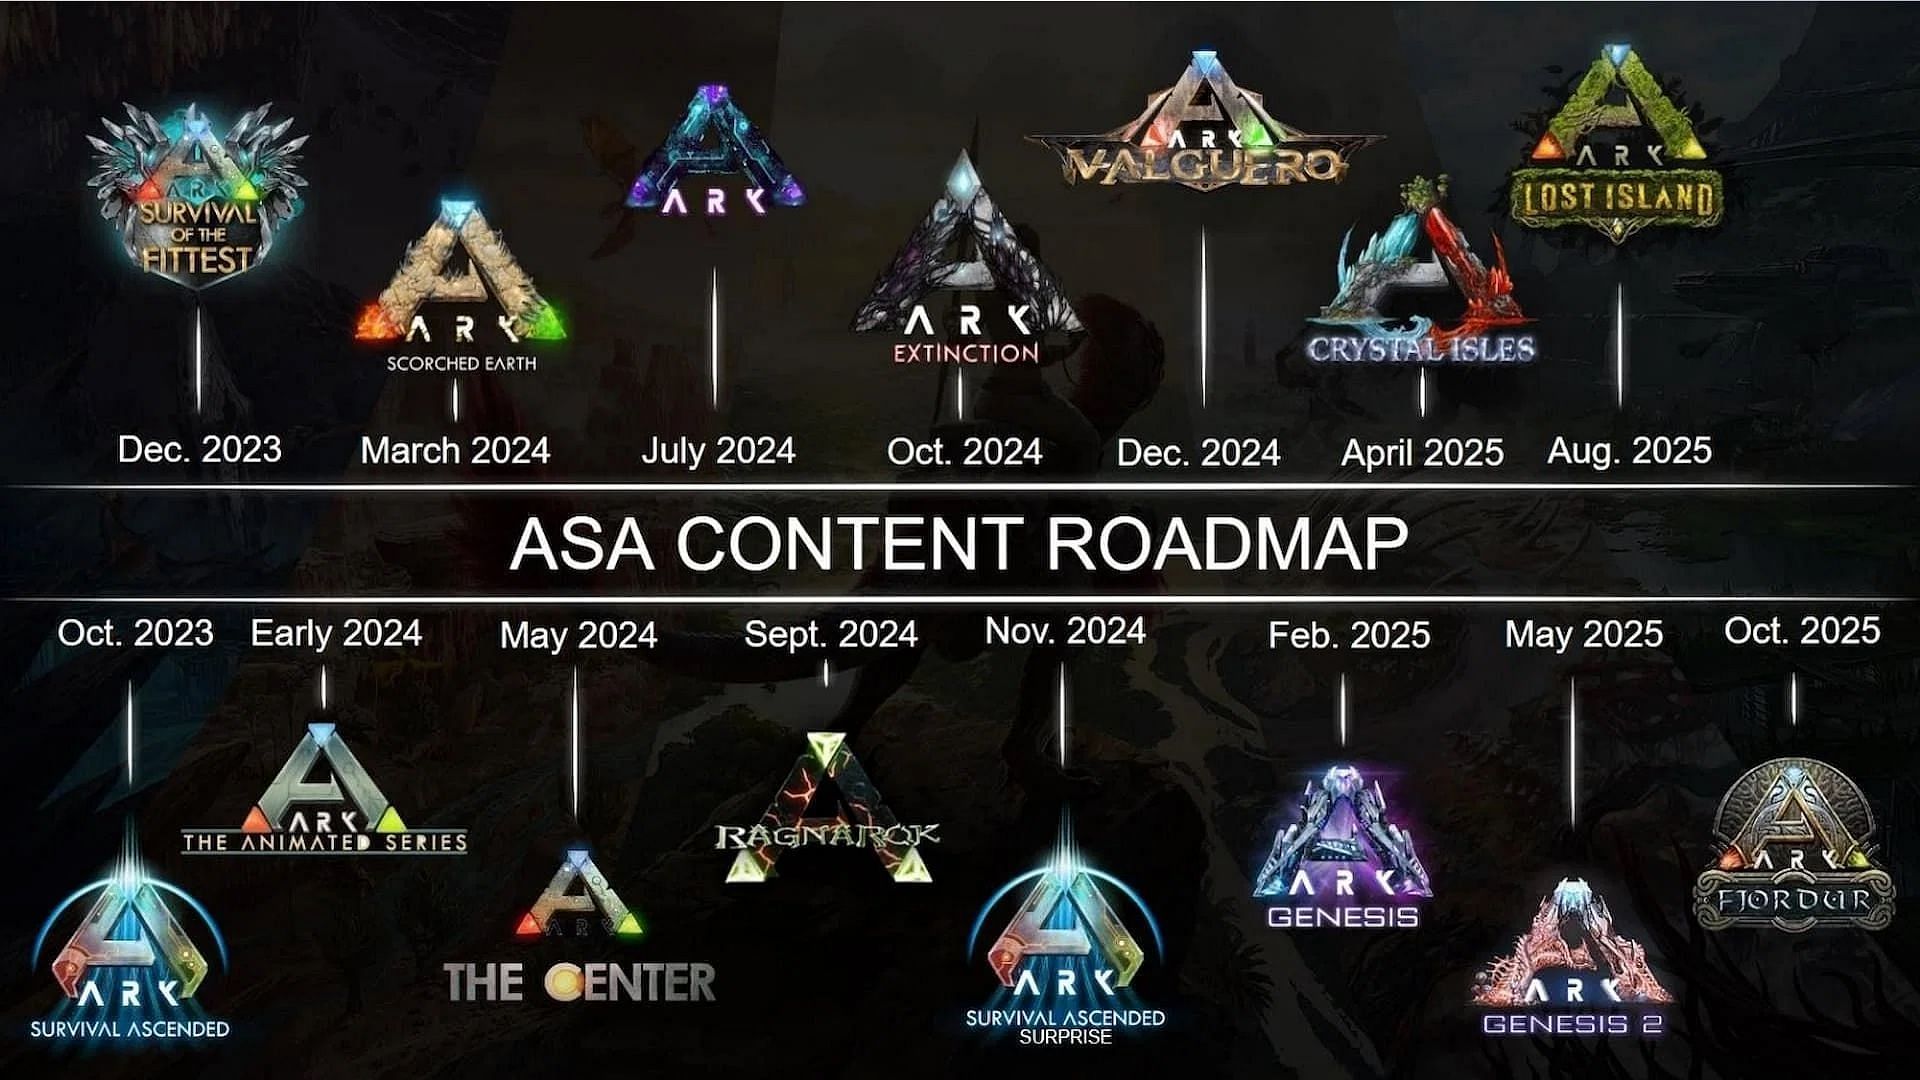 The Ark Survival Ascended DLC roadmap (Image via Studio Wildcard)